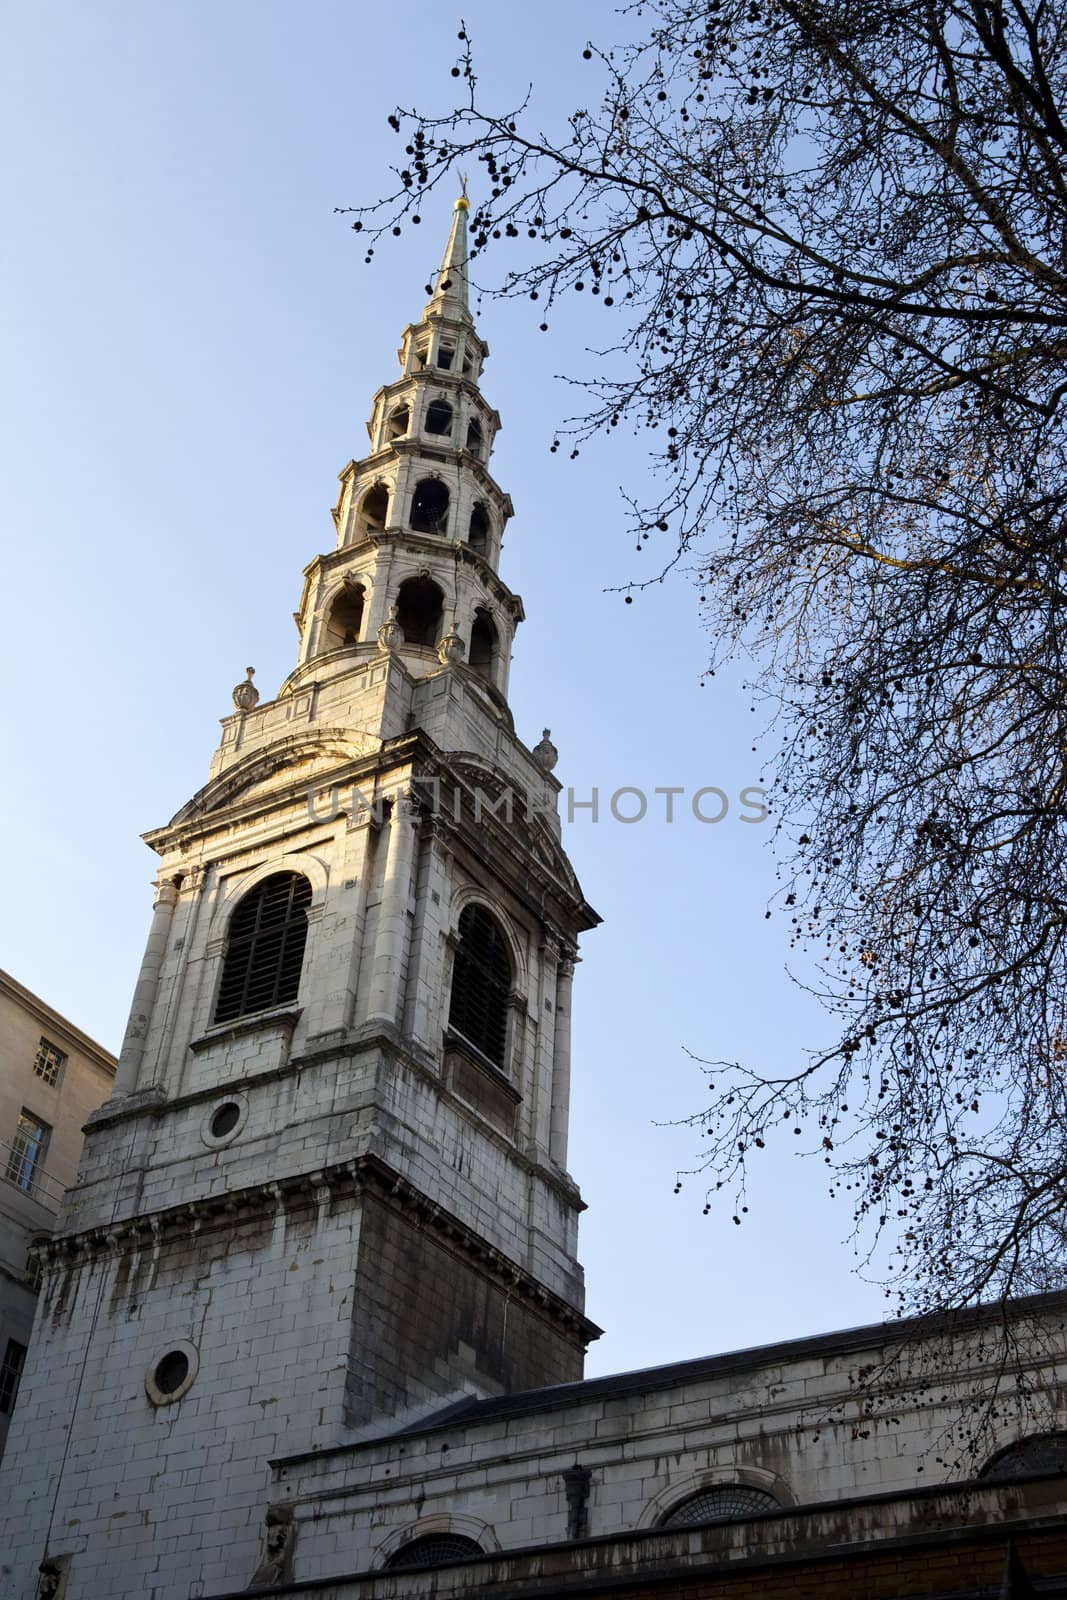 St. Brides Church in Fleet Street, London